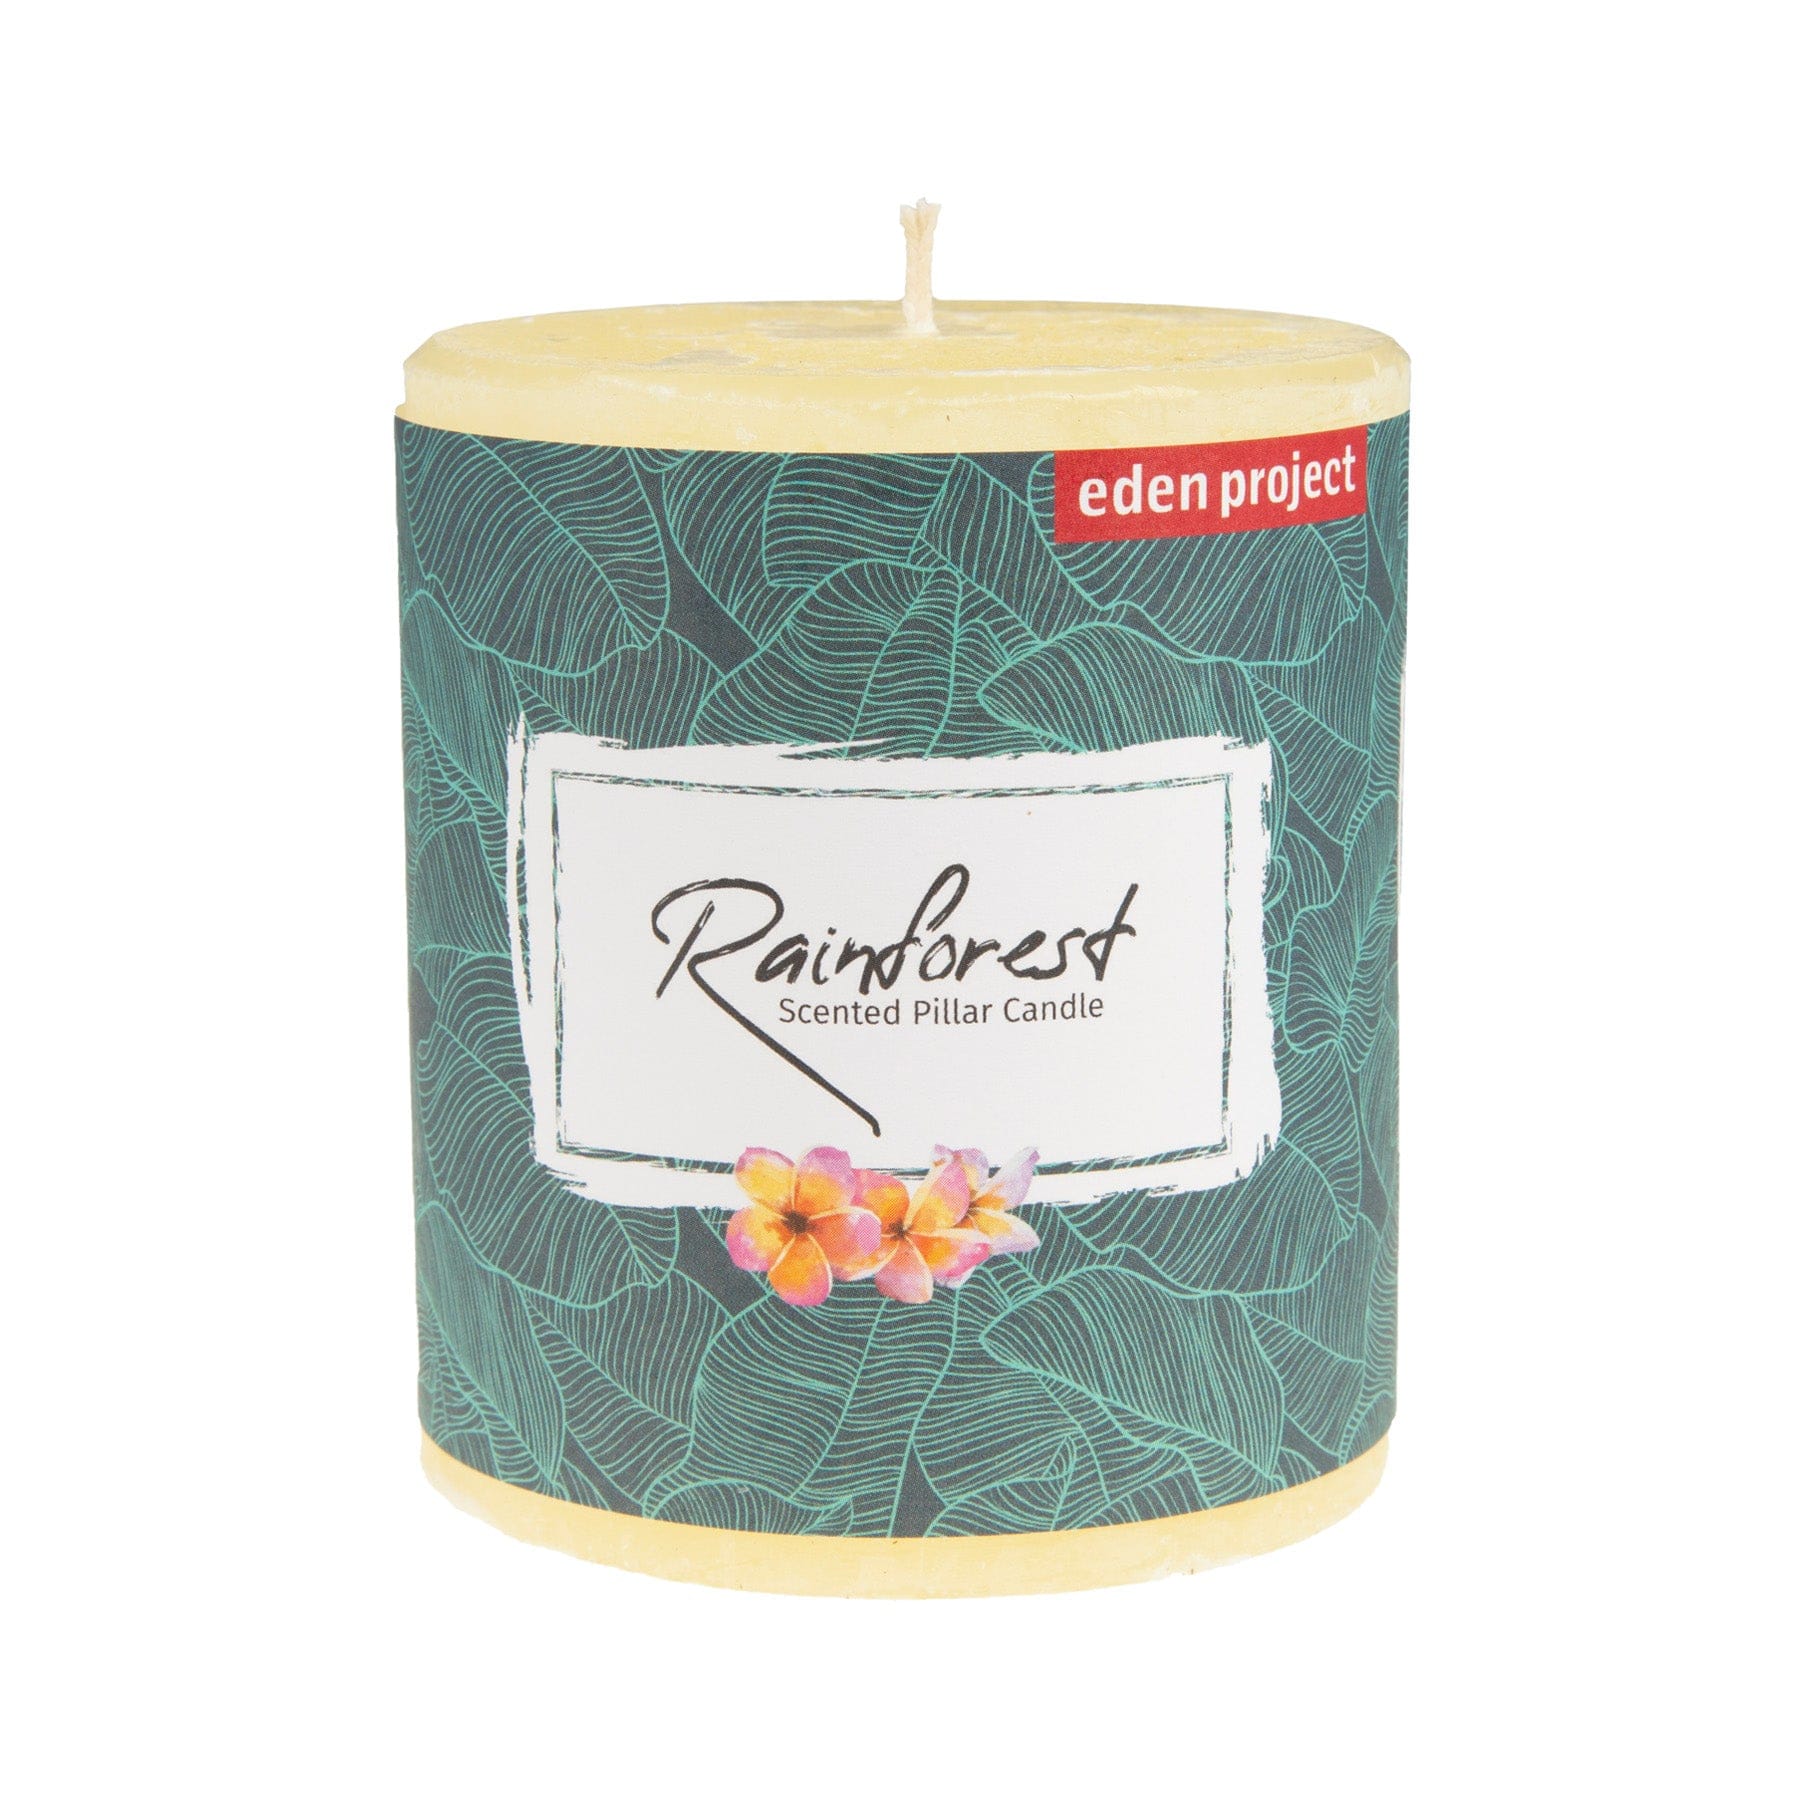 Rainforest scented pillar candle